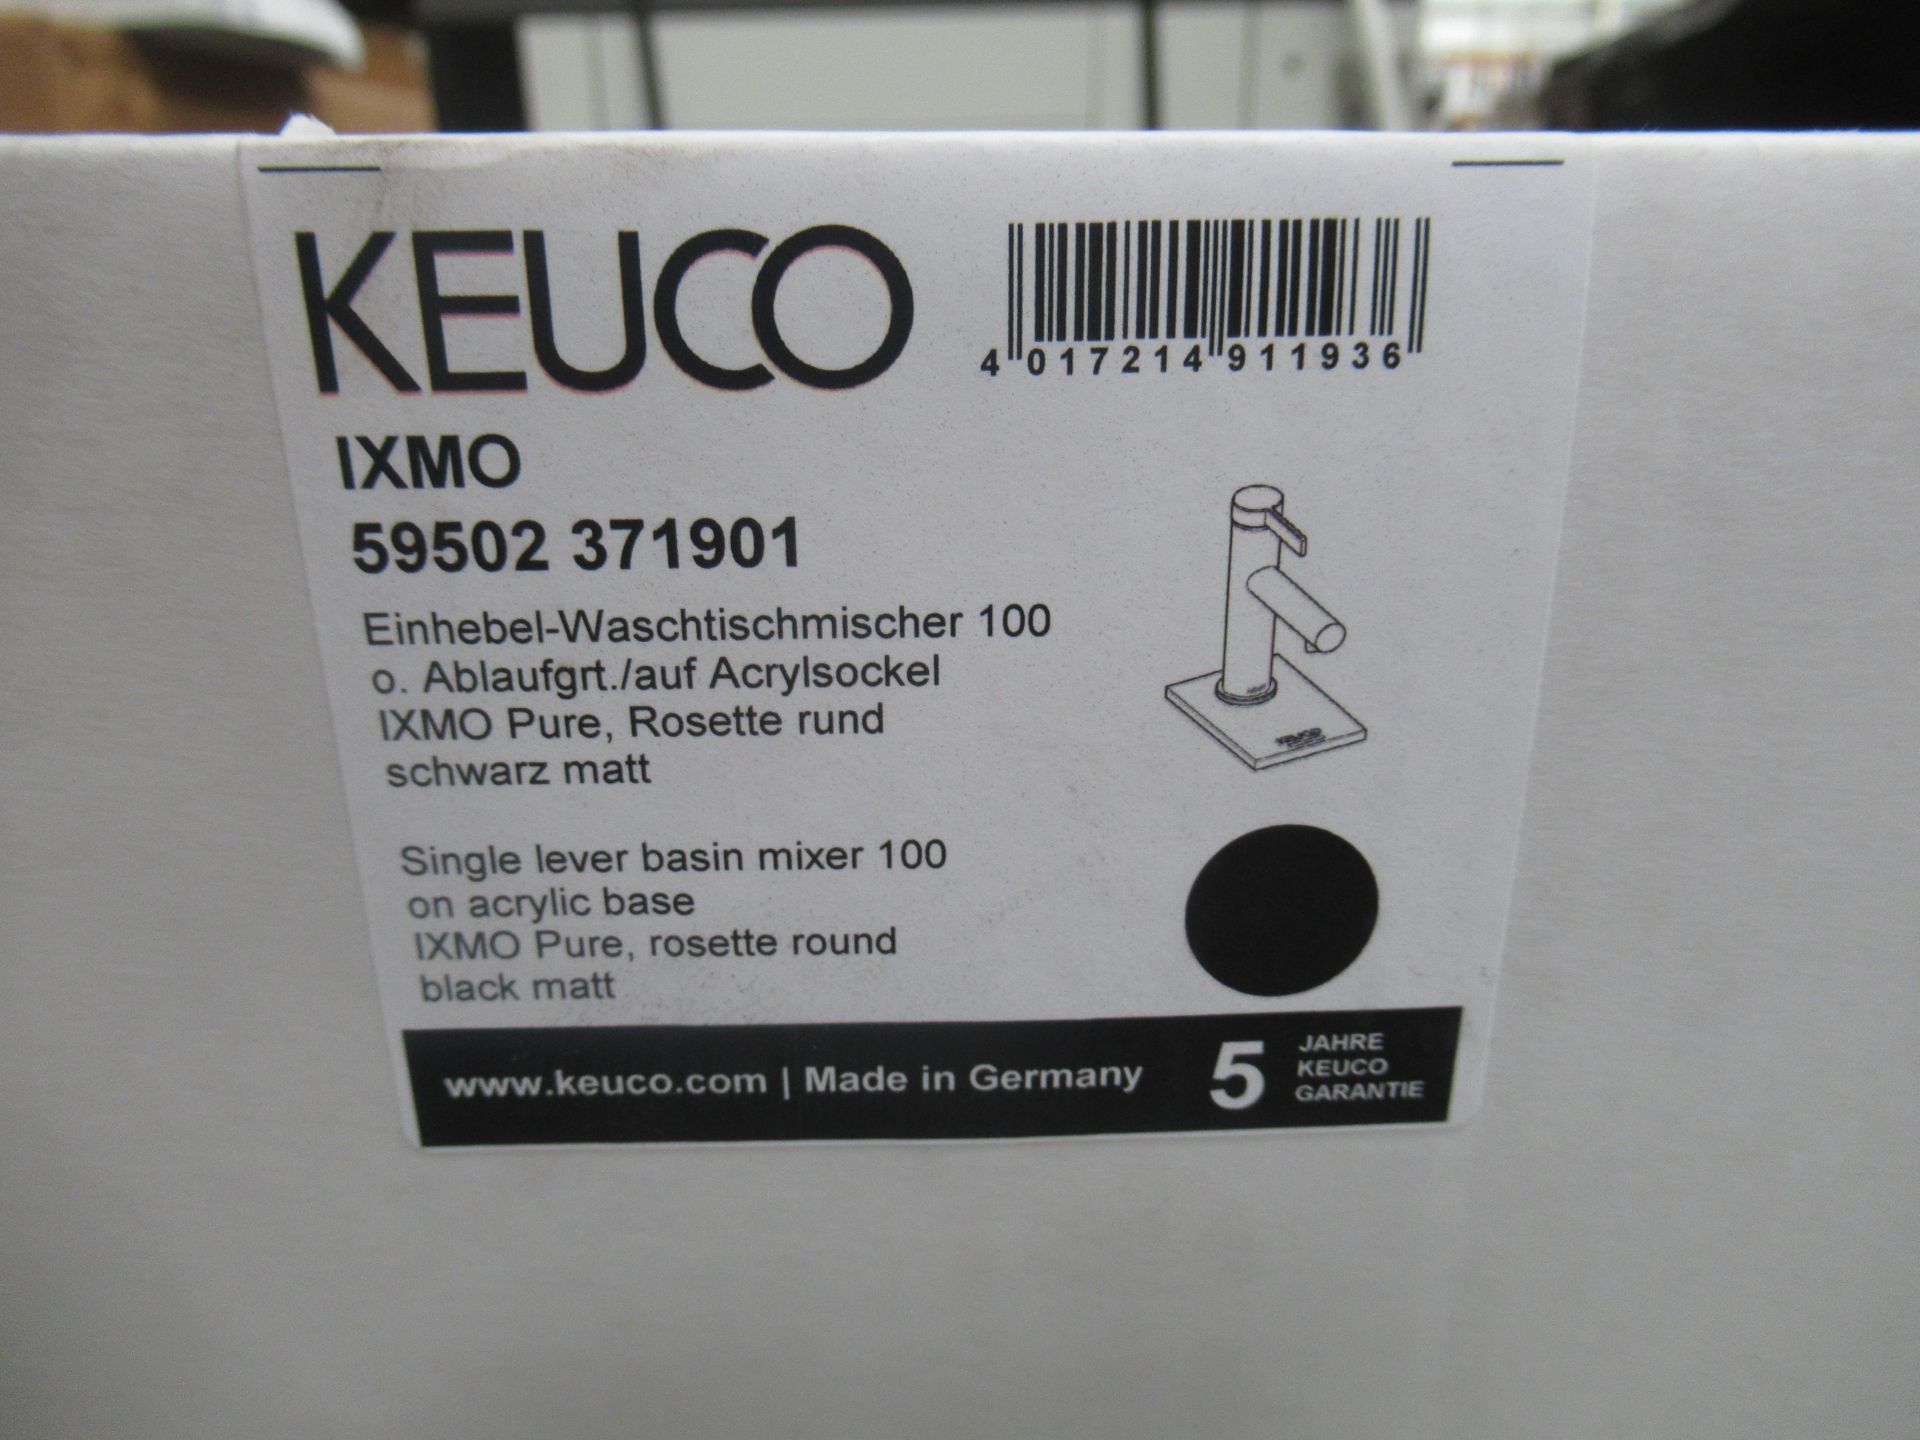 A Keuco IXMO Single Lever Basin Mixer 100-Tap, Black Matt, P/N 59502-371901 - Image 2 of 3